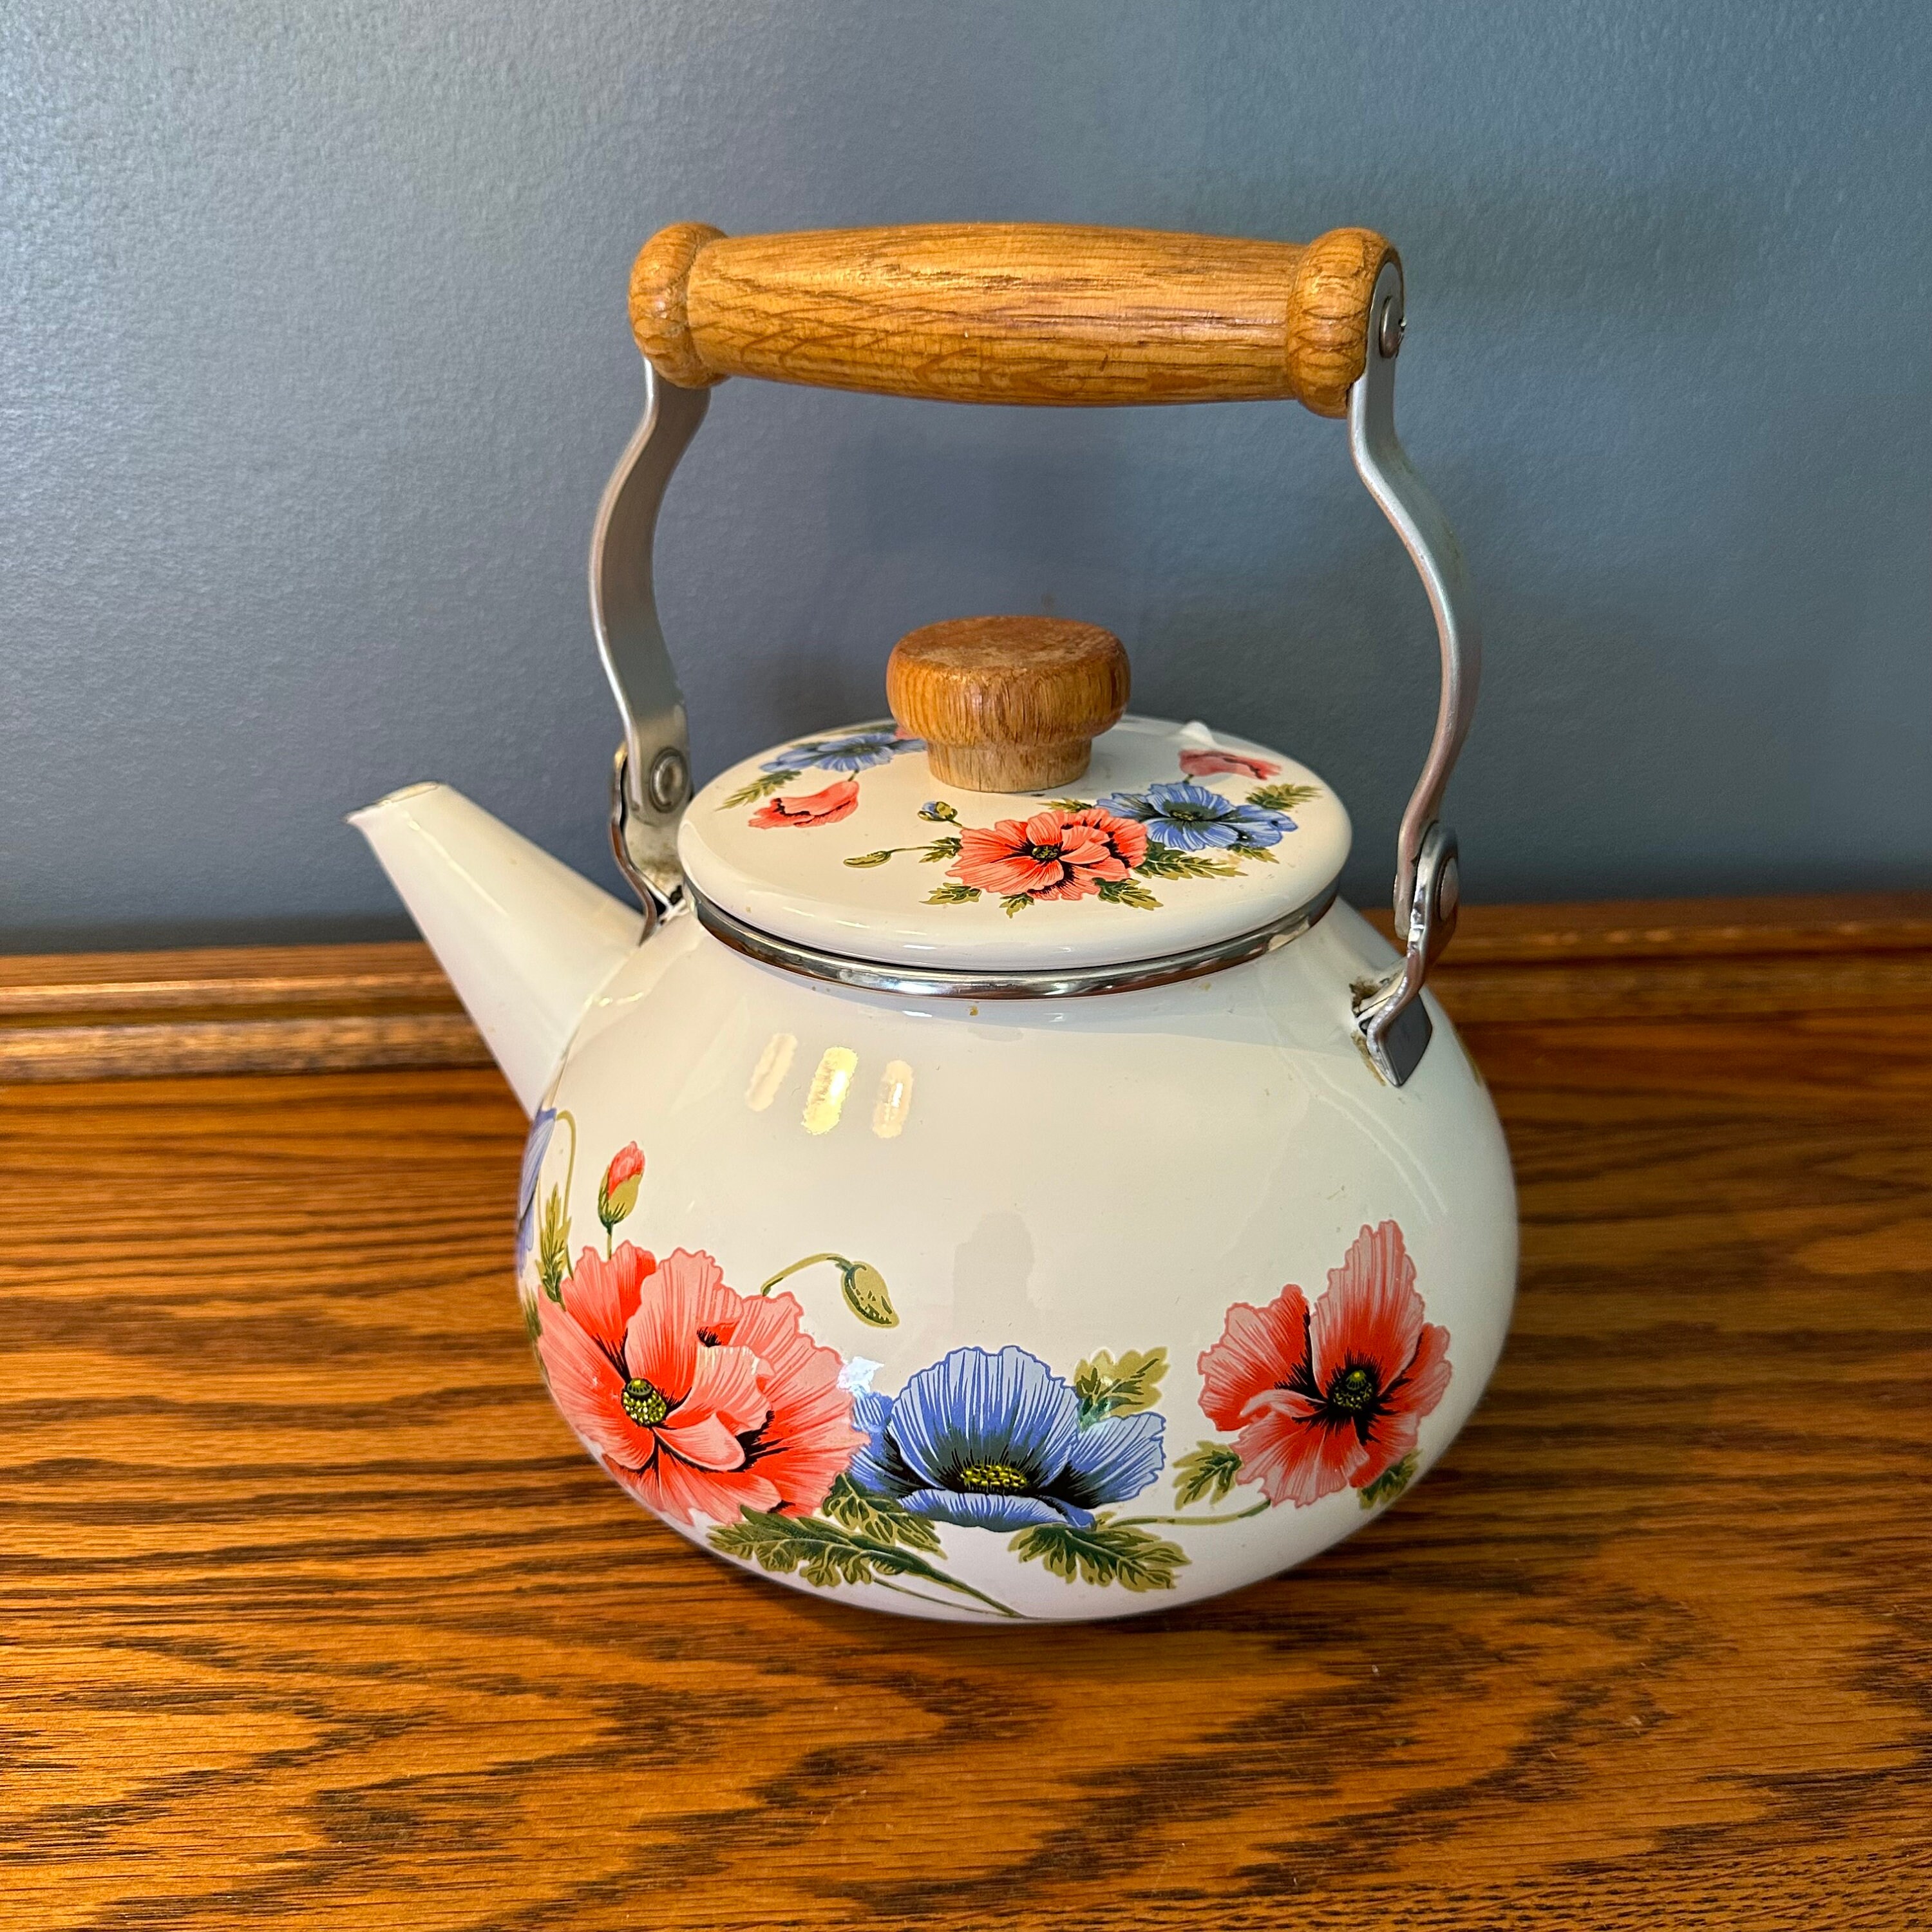 Pumtus 2.6 Quart Vintage Enamel Tea Kettle, Large Enameled Floral Teapot,  Flower Enamel on Steel Tea Pot Coffee Pot with Ceramic Cool Handle for